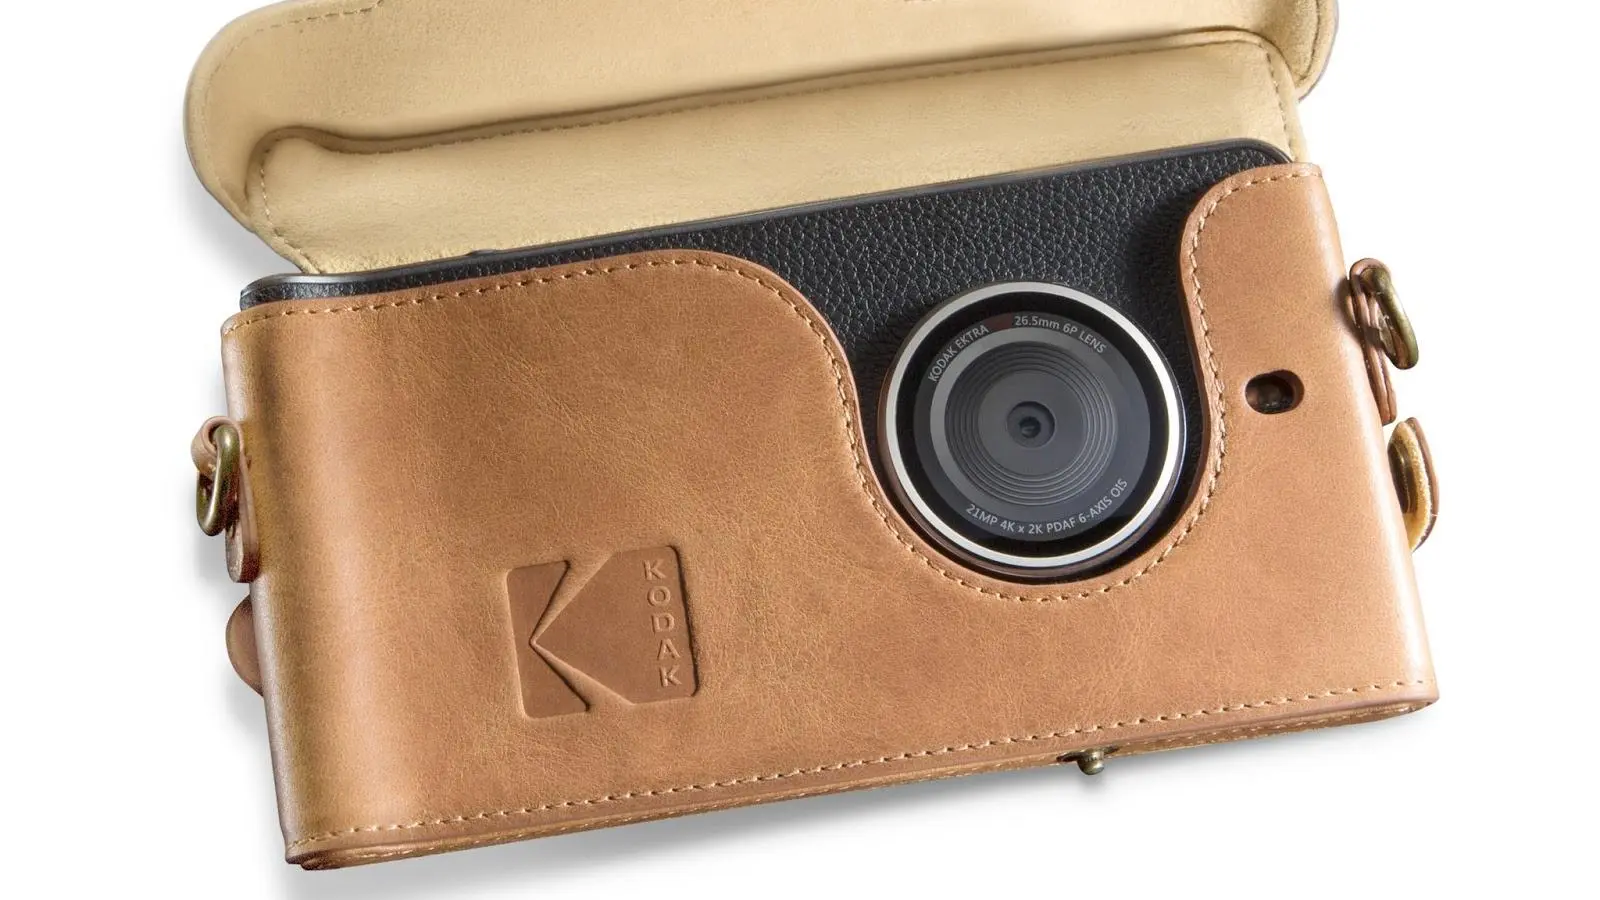 Realme e Kodak hanno creato un nuovo smartphone Kodak Ektra